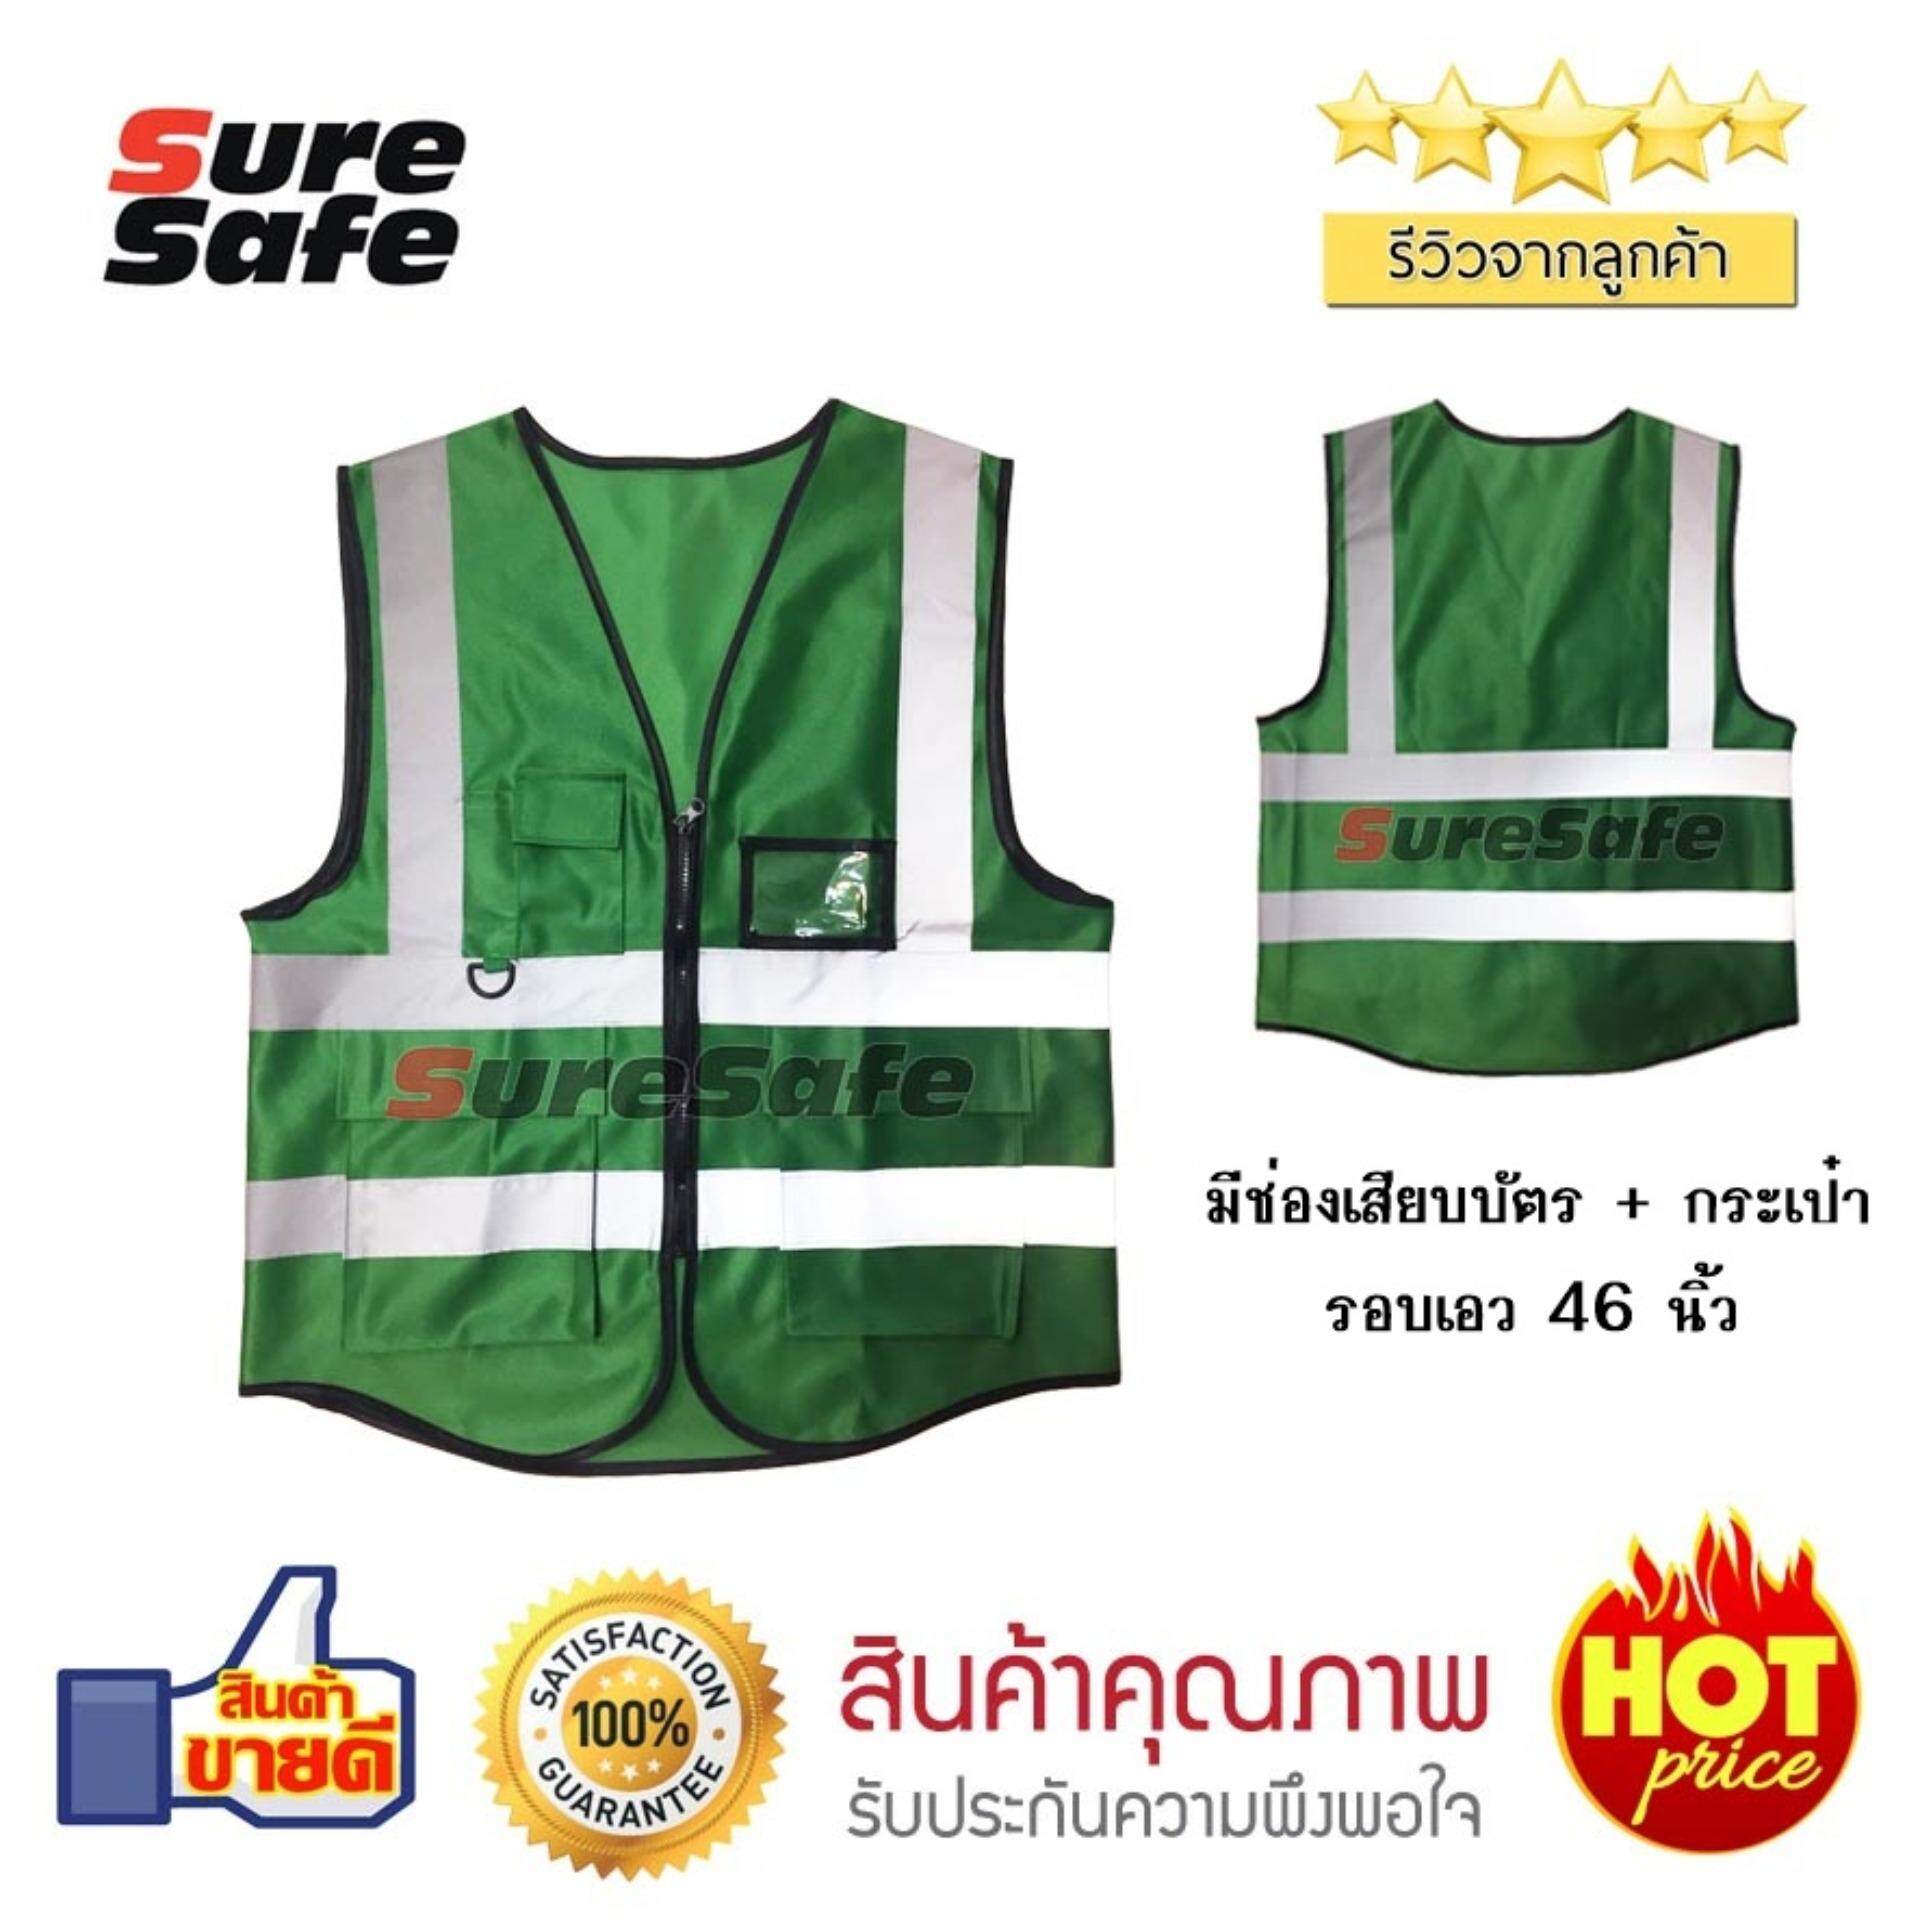 Suresafe Safety Vest เสื้อสะท้อนแสงรุ่นเต็มตัว สีเขียว มีช่องเสียบบัตรและปากกา